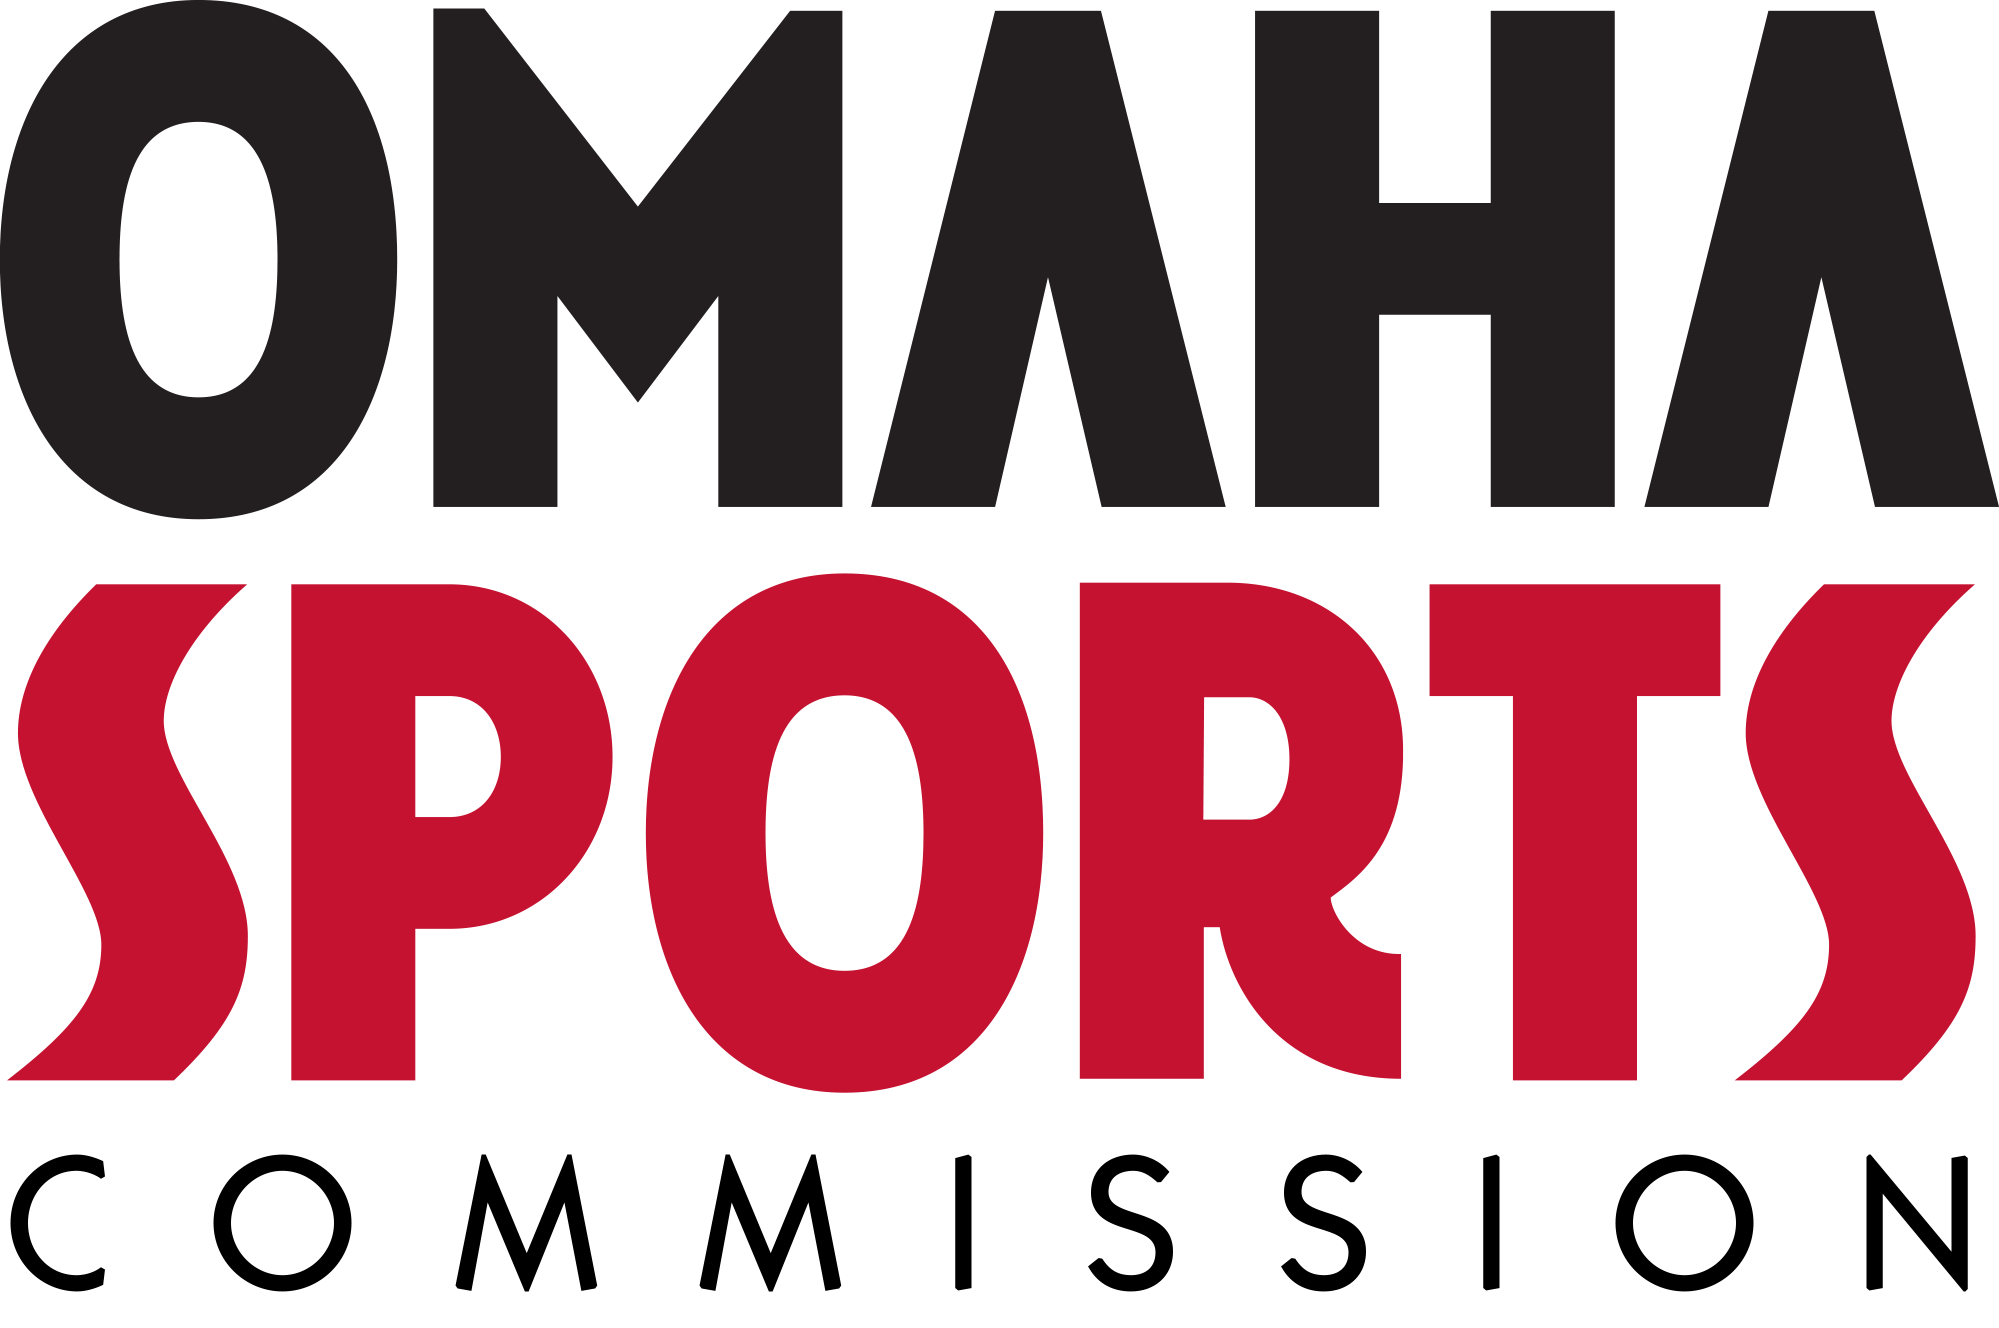 Omaha Sports Commission